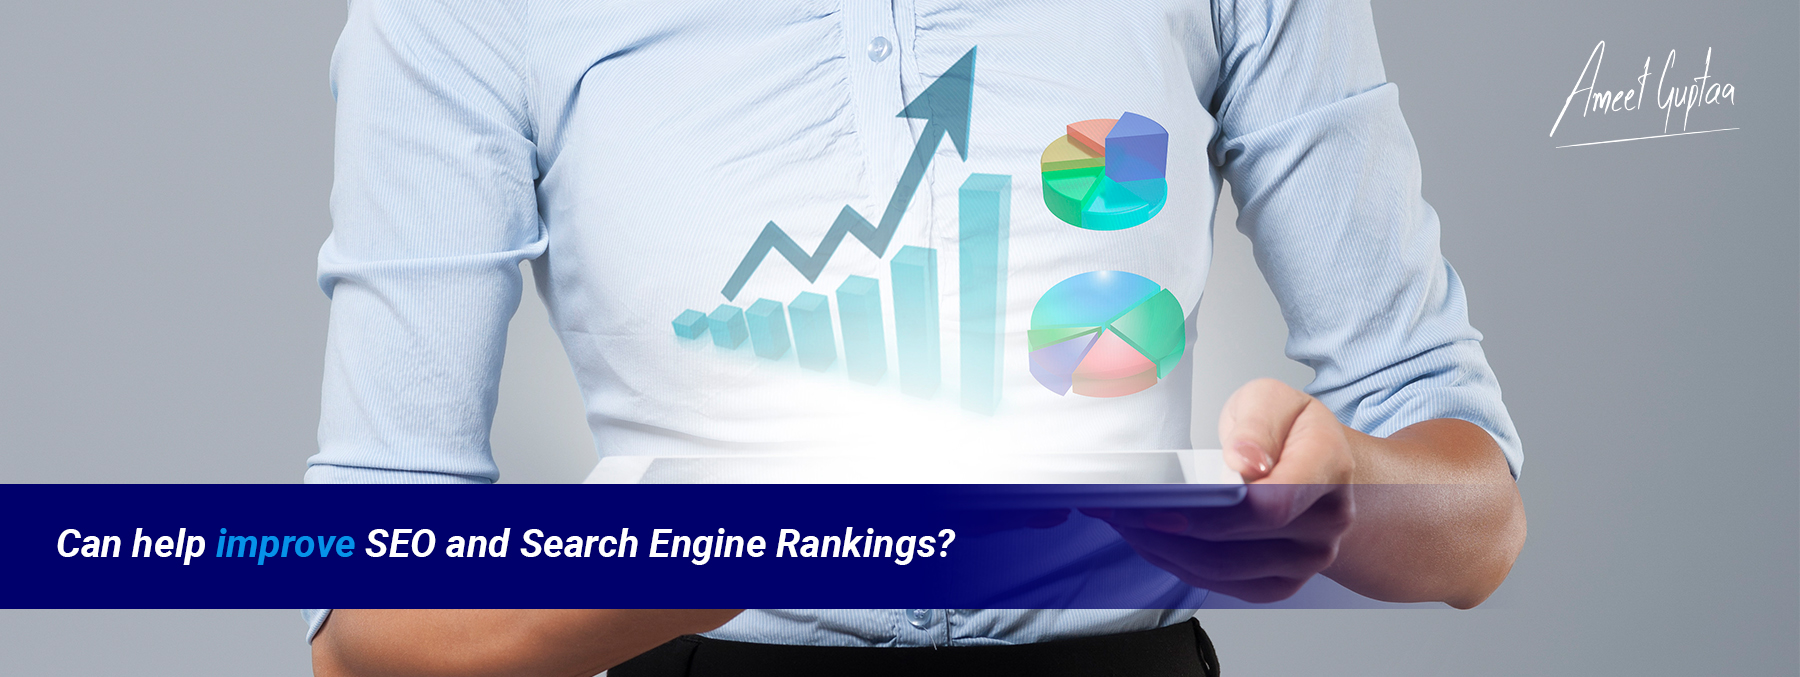 Can-help-improve-SEO-and-Search-Engine-Rankings-Ameet-Guptaa